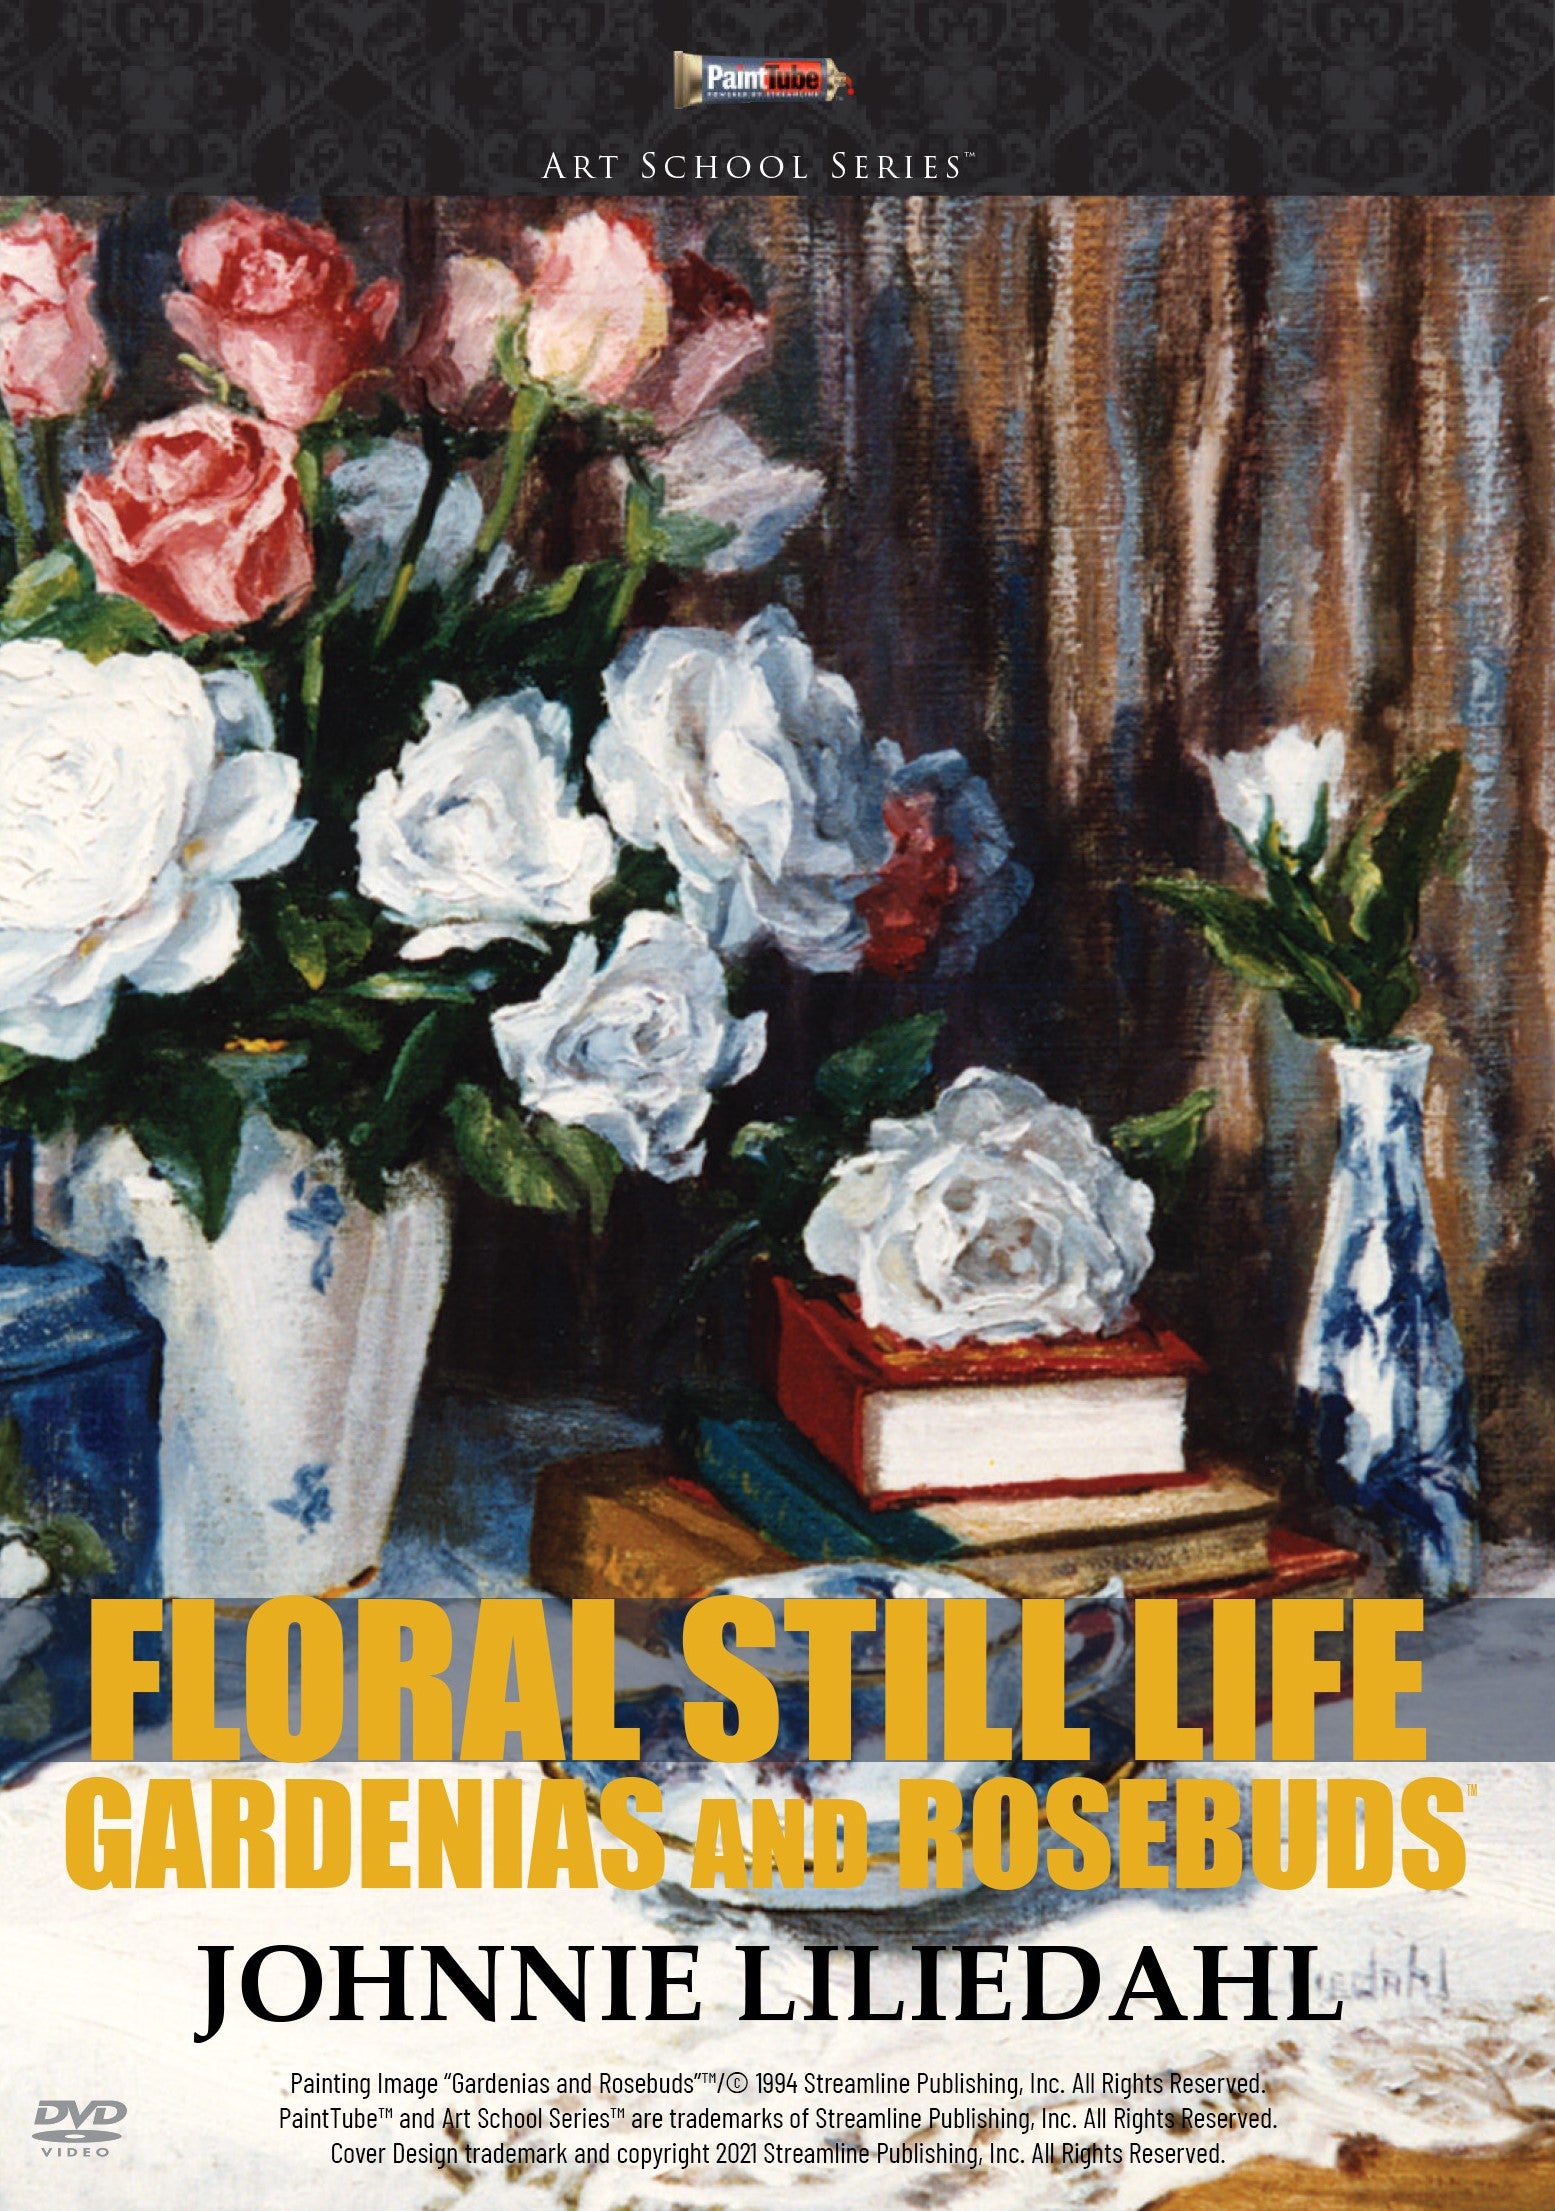 Johnnie Liliedahl: Gardenias and Rosebuds